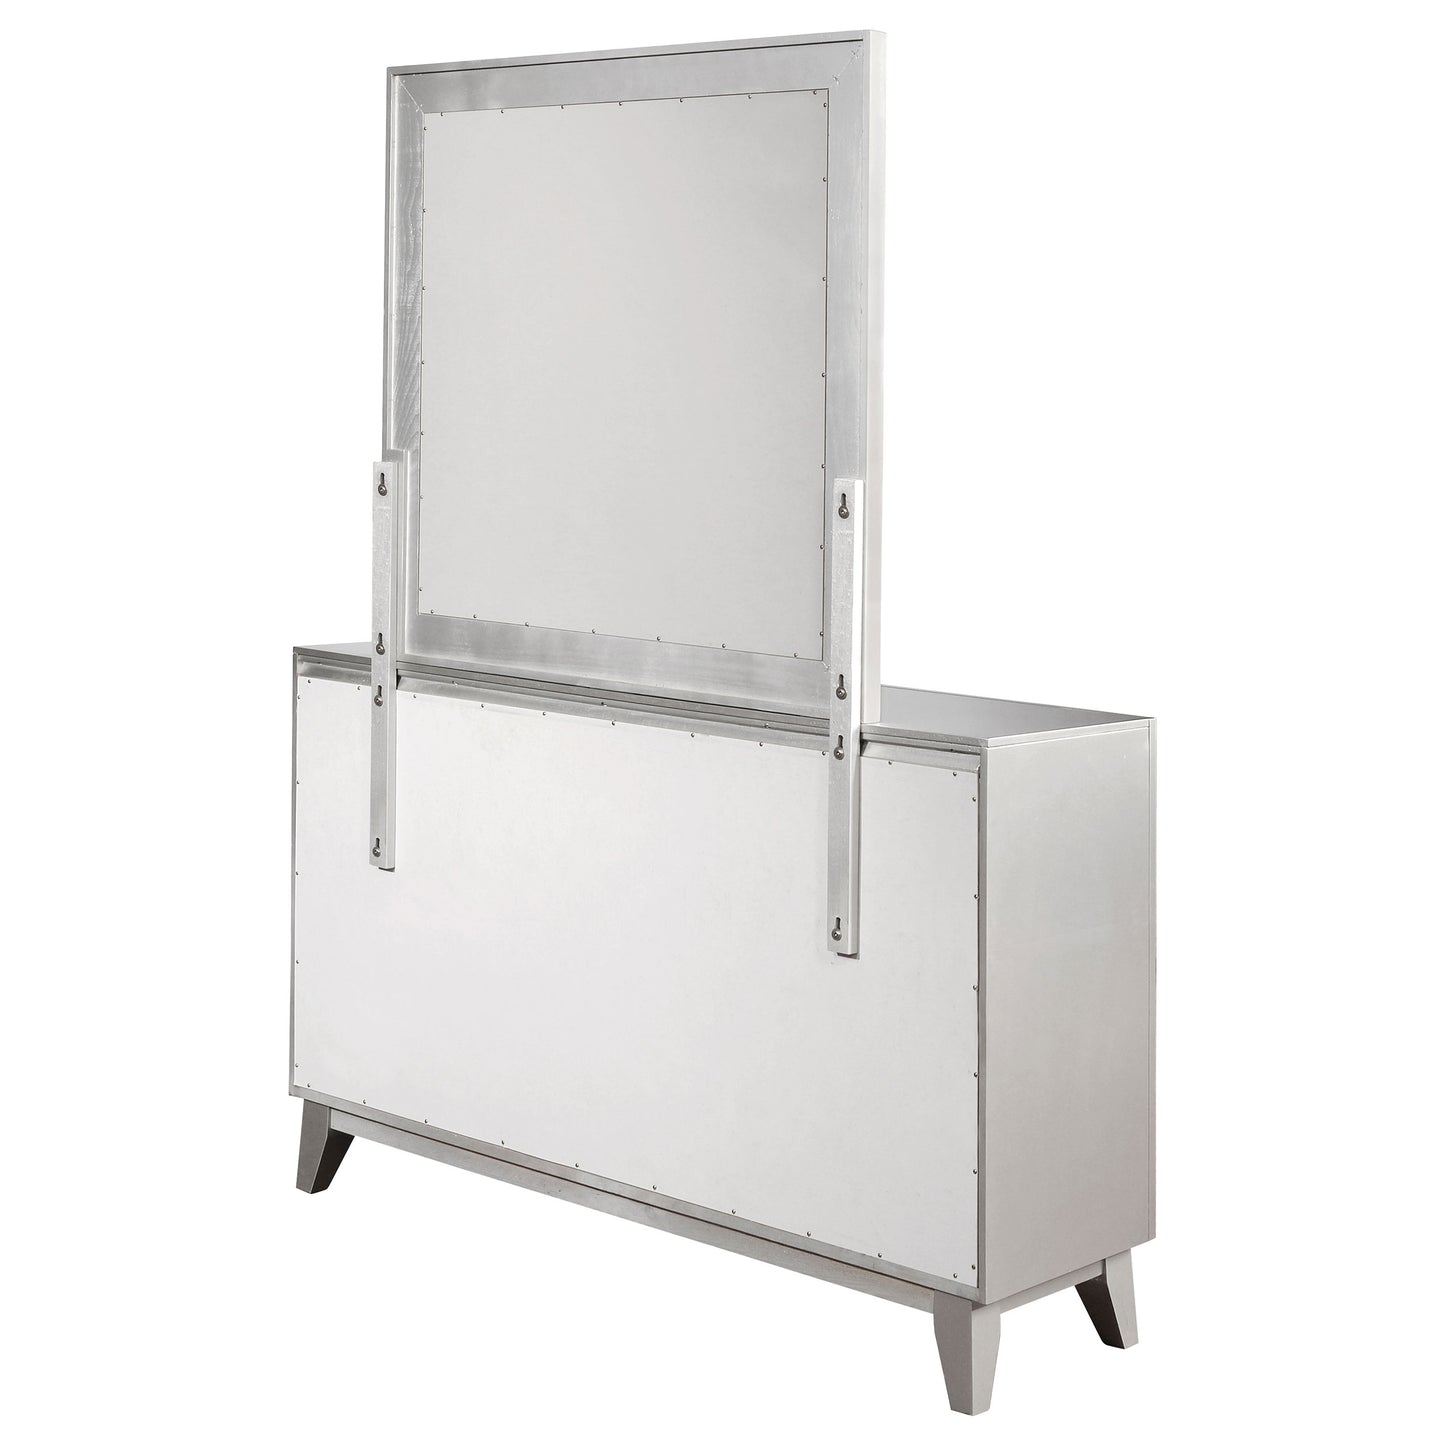 Leighton 7-drawer Dresser with Mirror Metallic Mercury